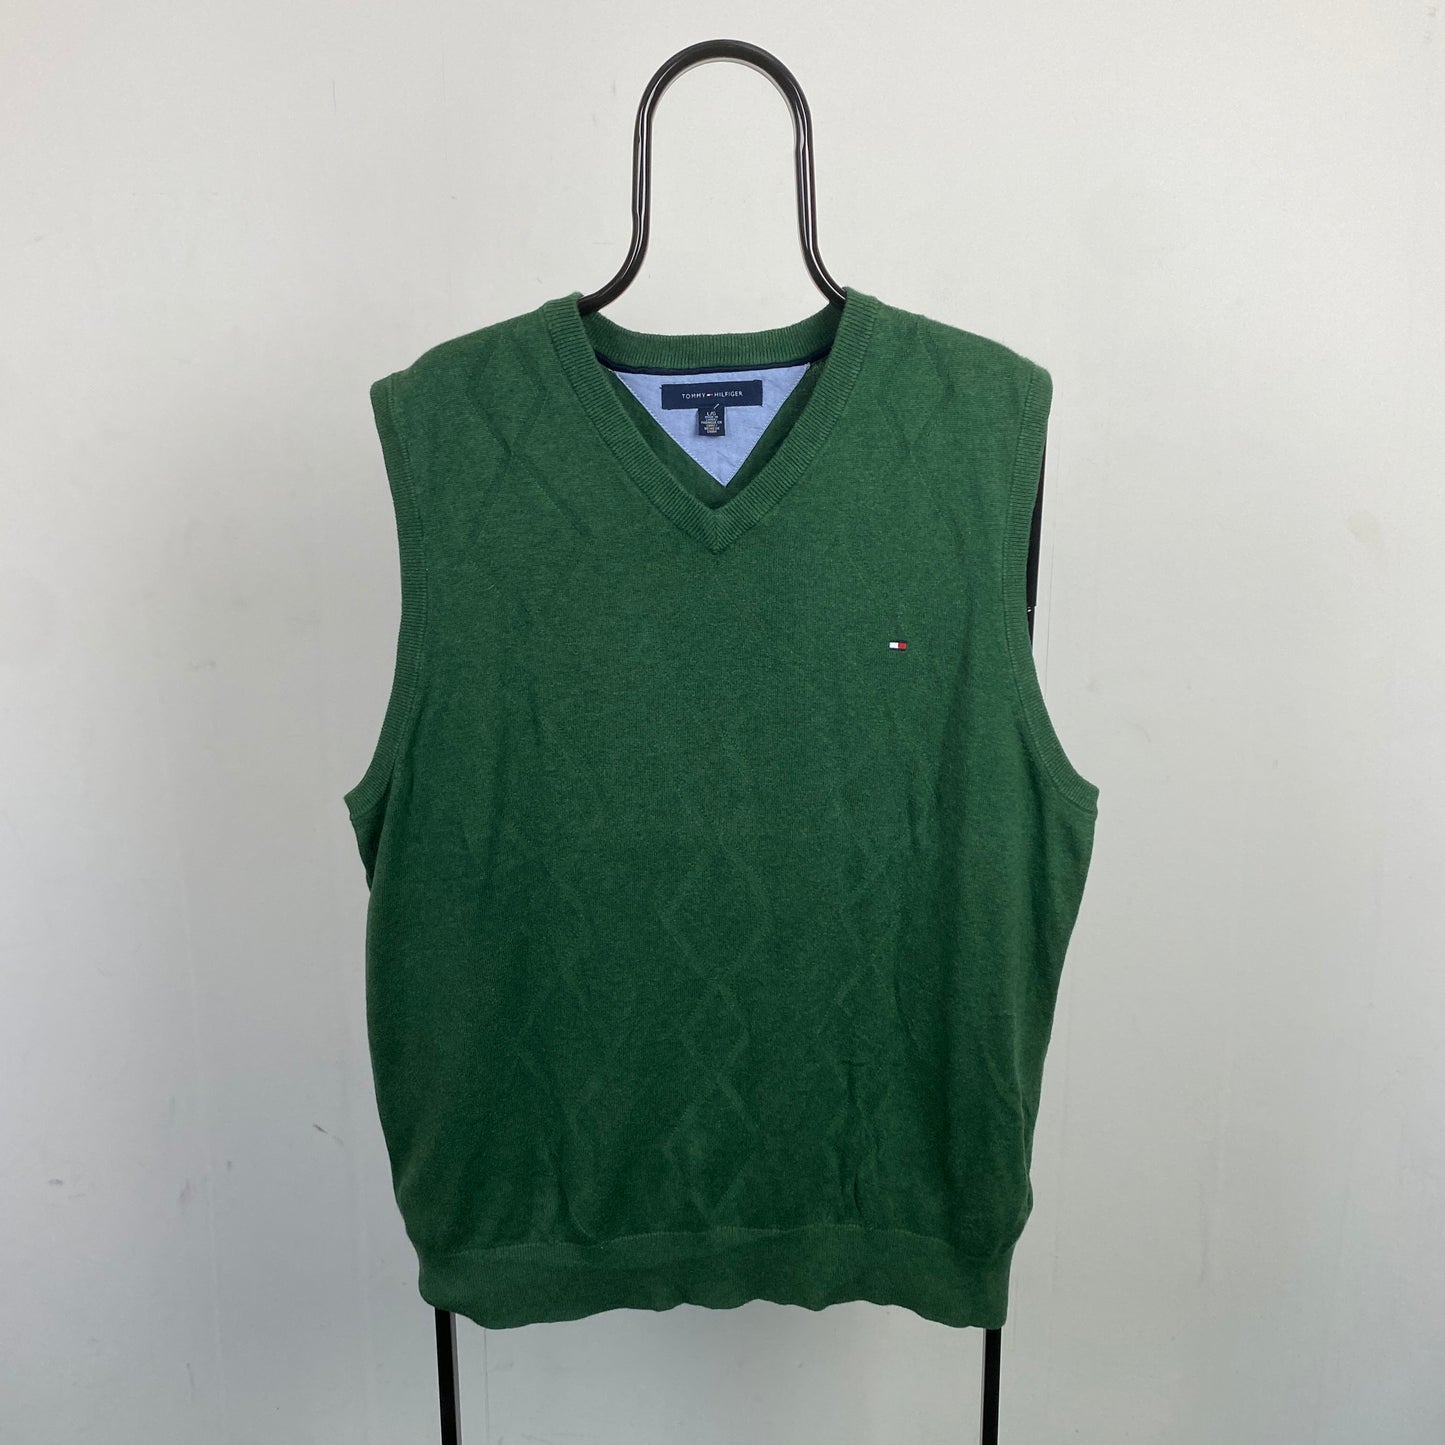 Retro Tommy Hilfiger Knit Sweater Vest Sweatshirt Green Large